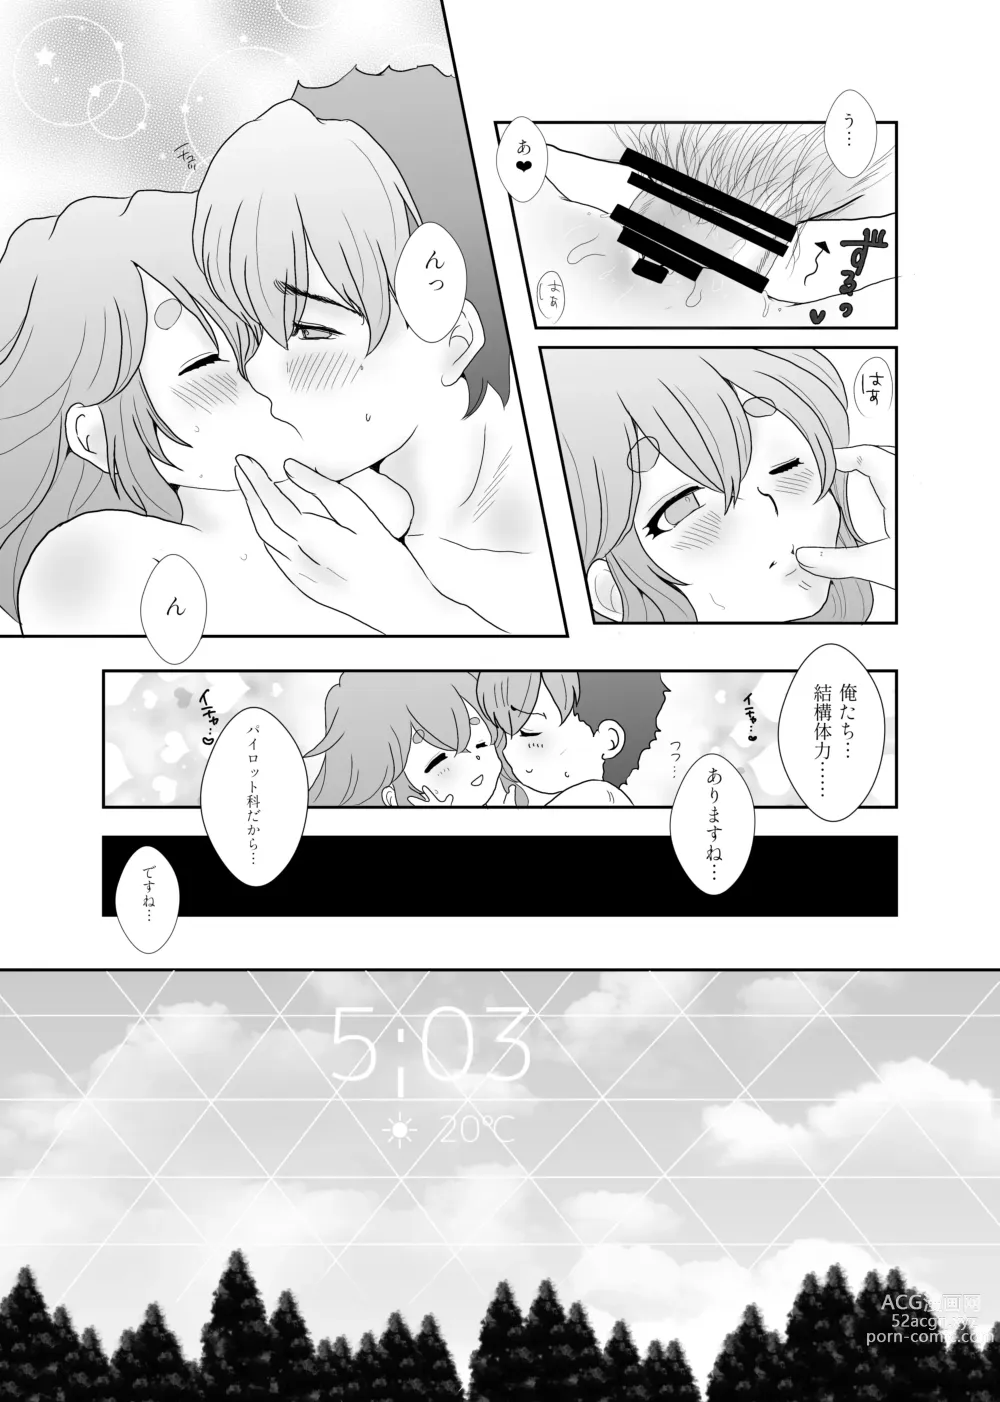 Page 24 of doujinshi Nichijō romantikku